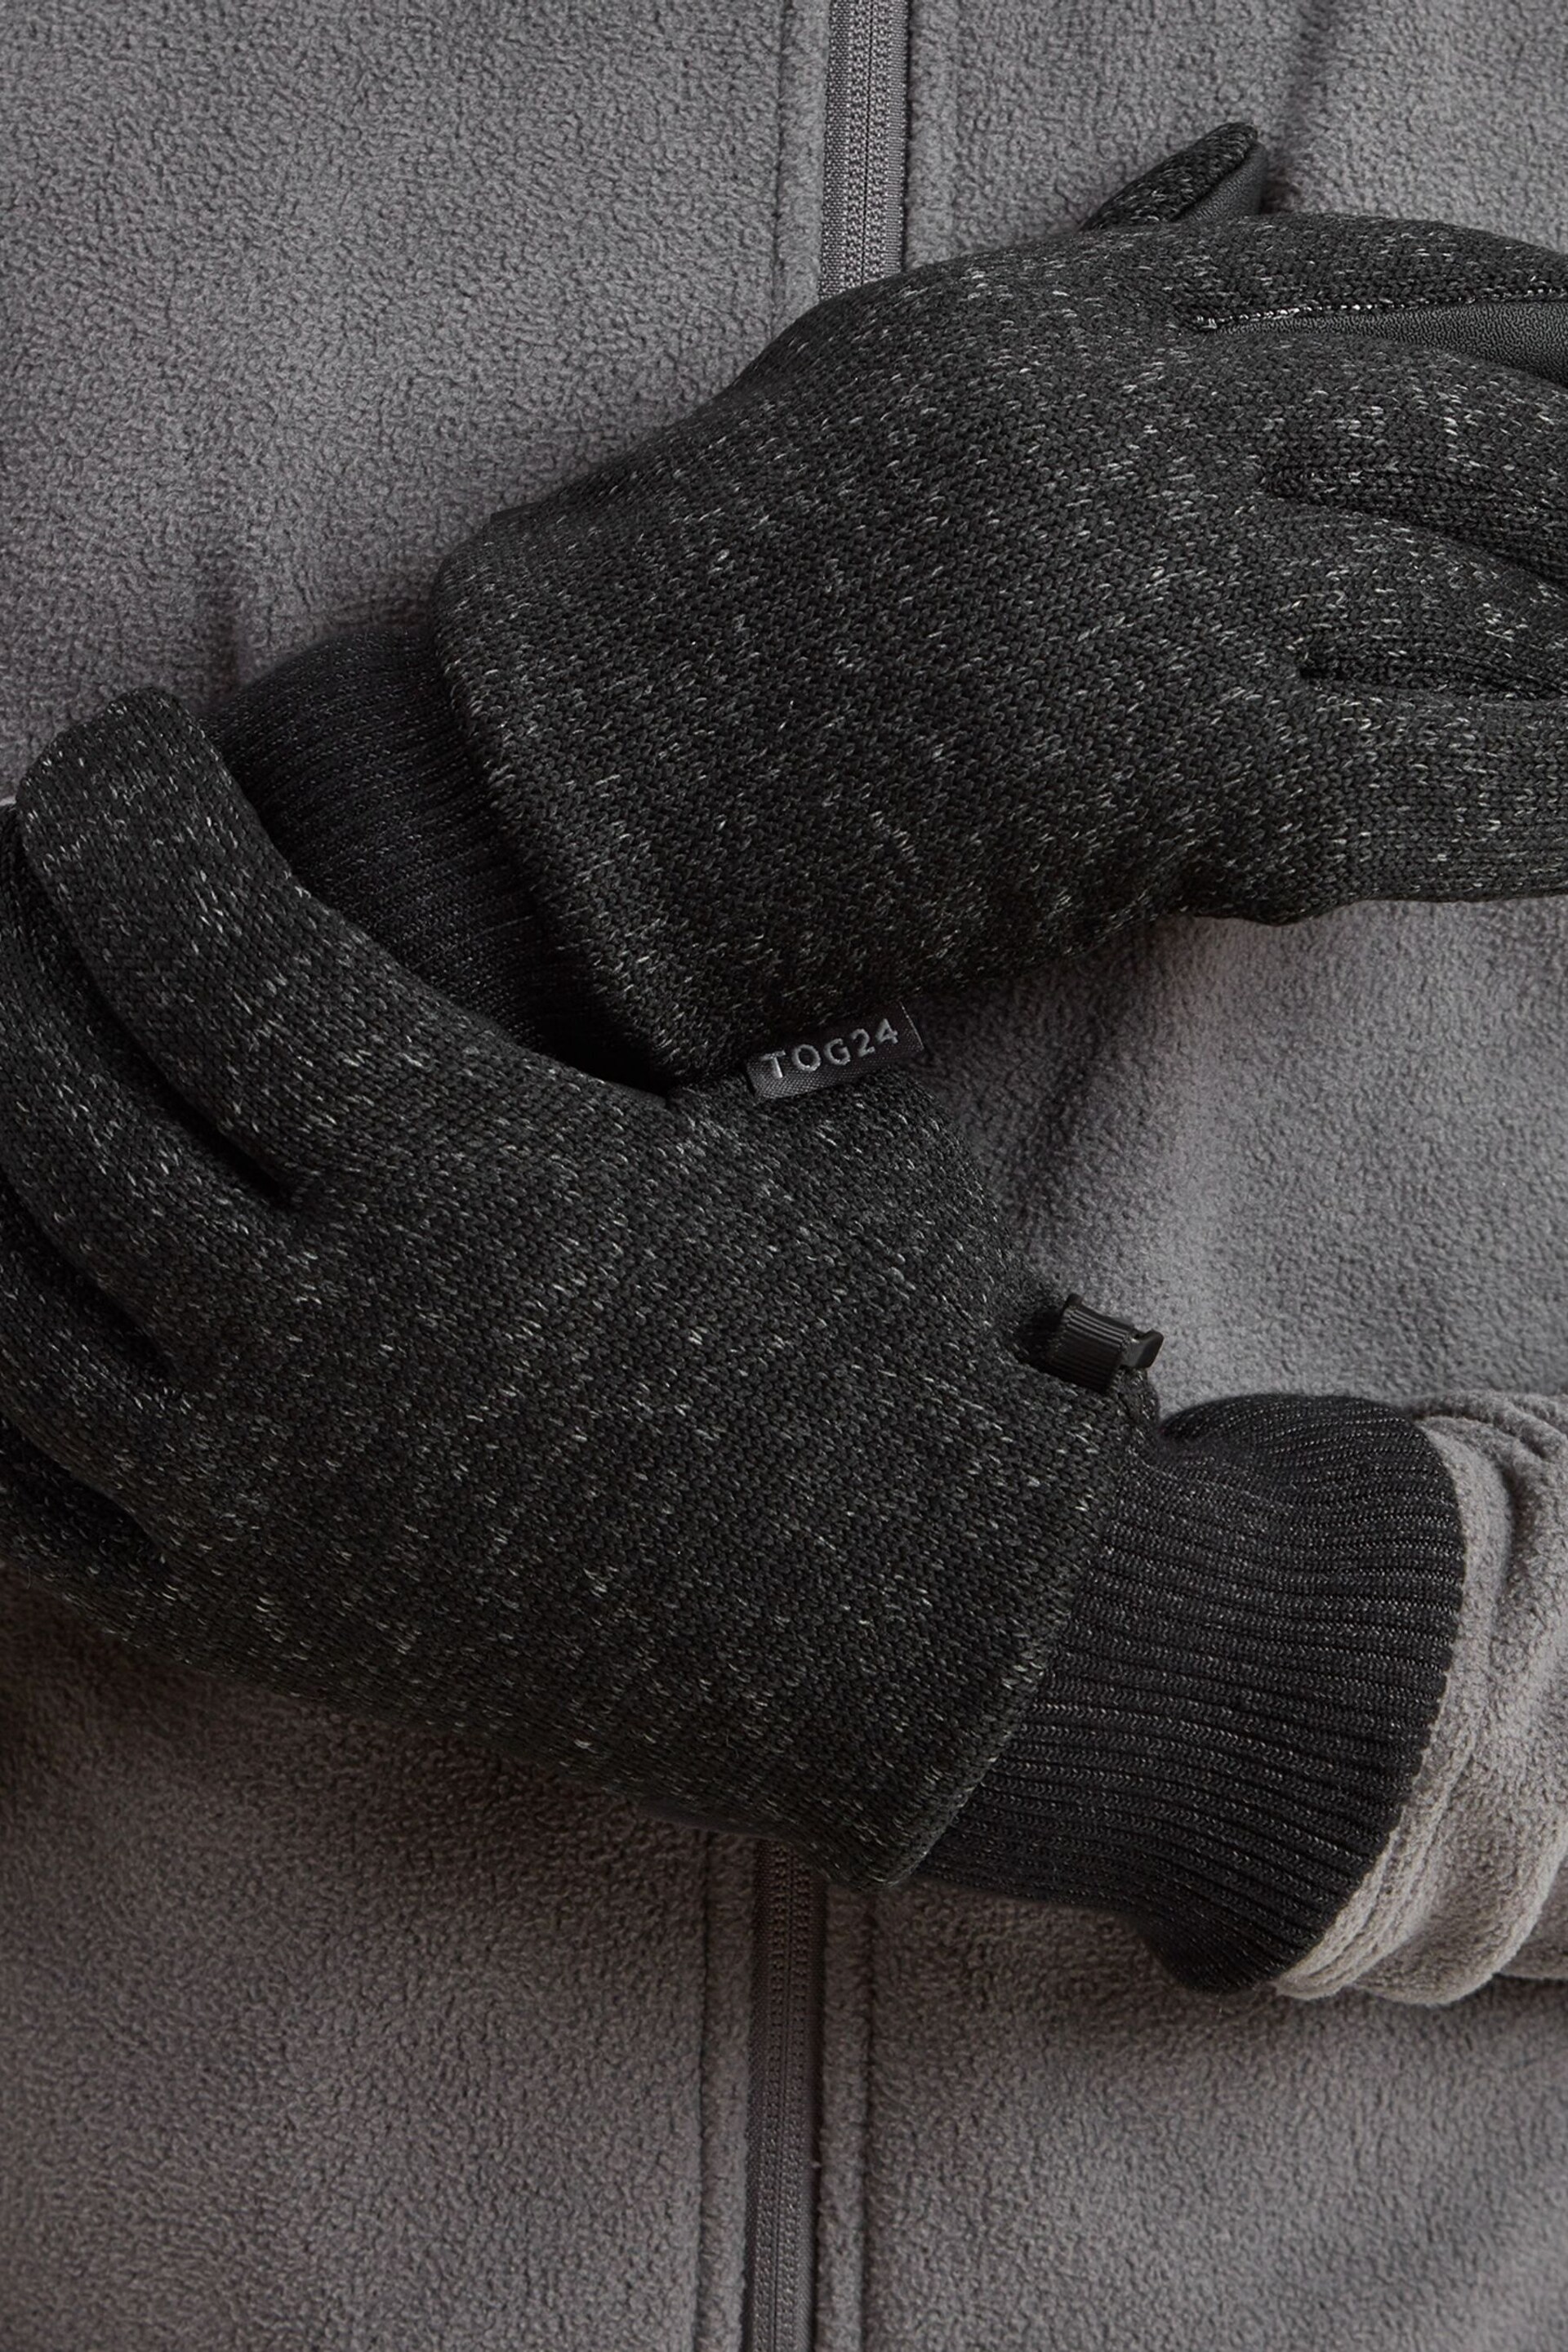 Tog 24 Black Storm Knitlook Powerstretch Gloves - Image 2 of 2